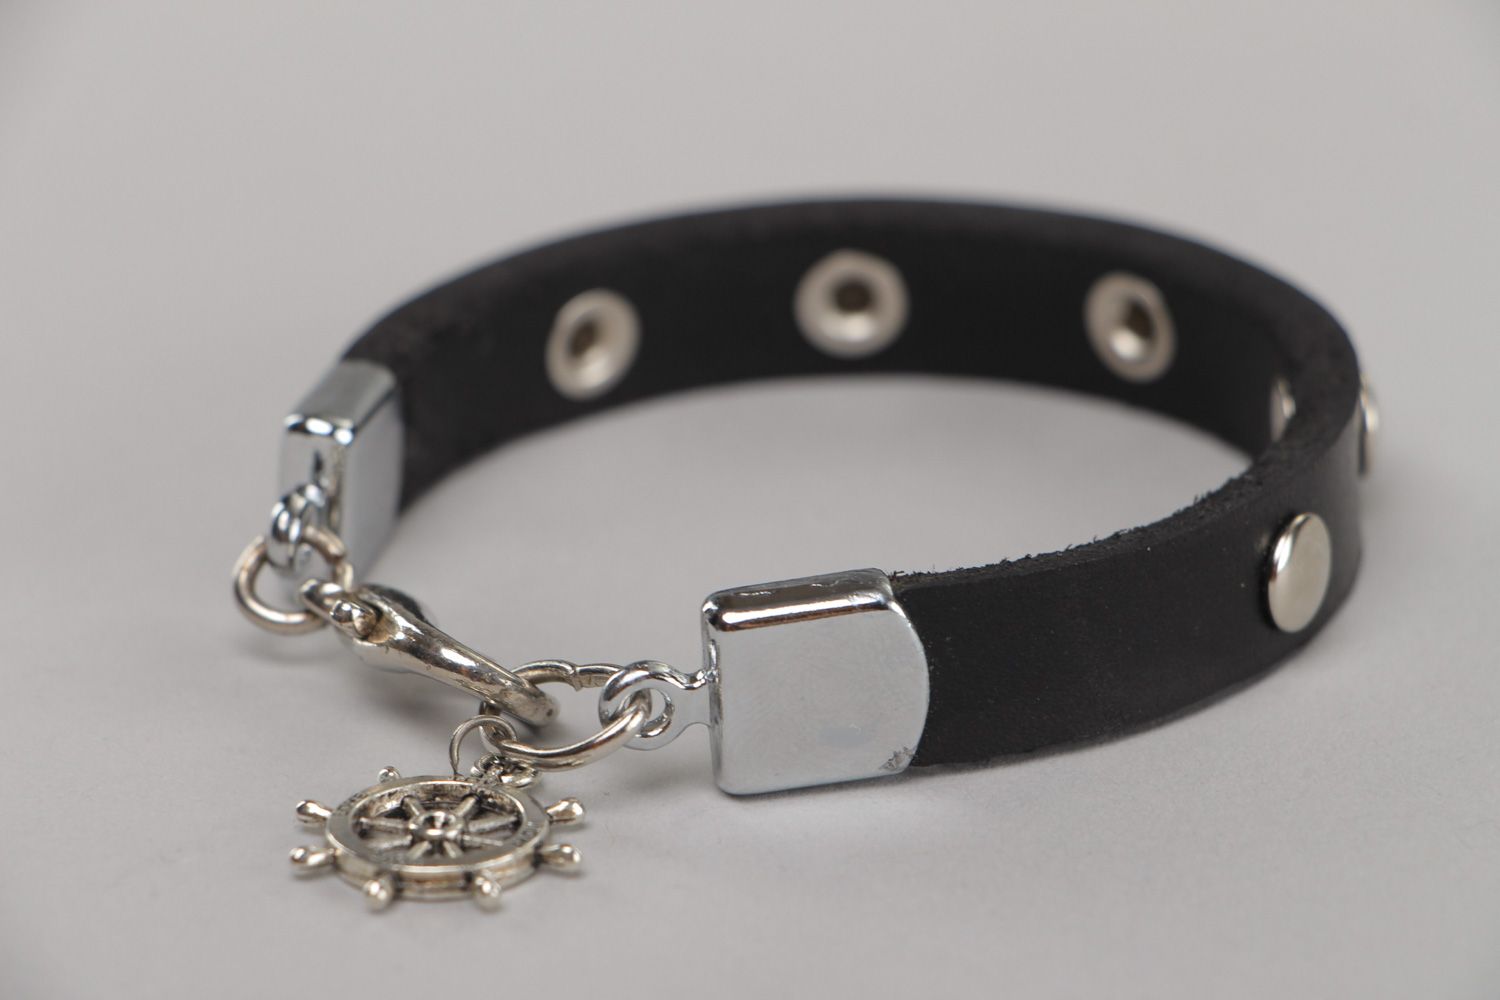 Handmade wrist bracelet woven of genuine leather with metal charm steering wheel photo 2